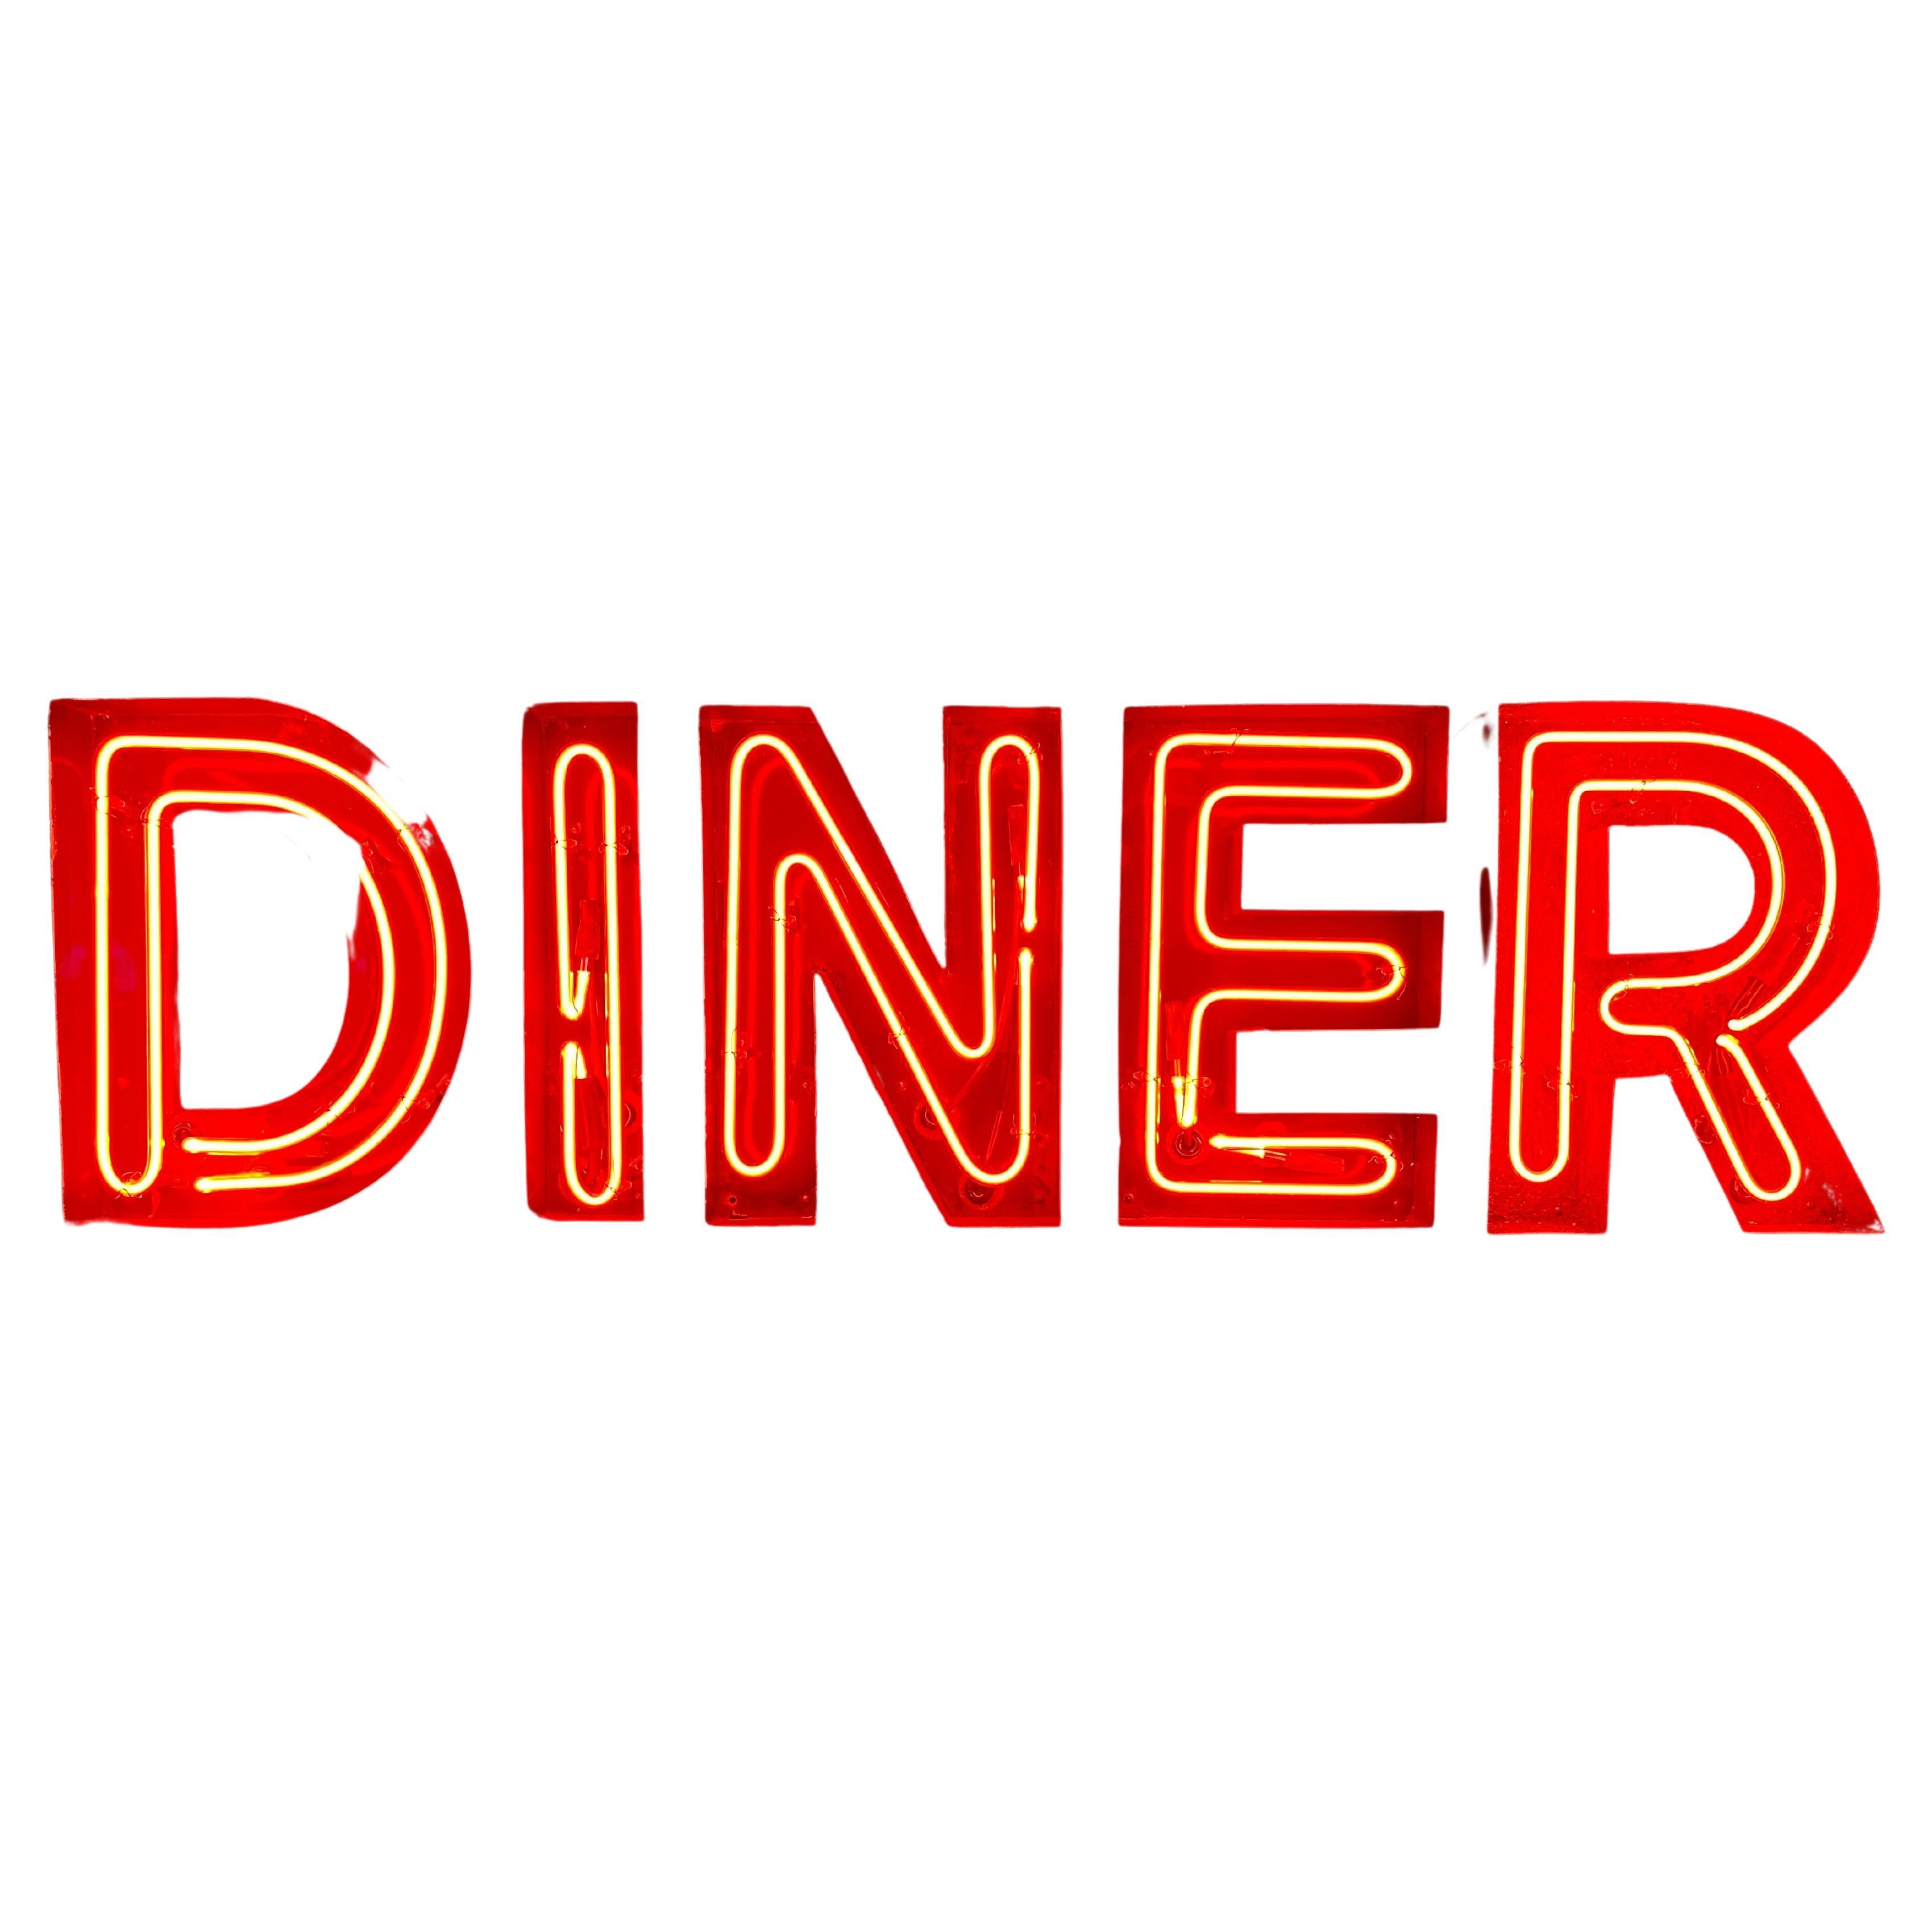 1950’s Neon Sign Diner